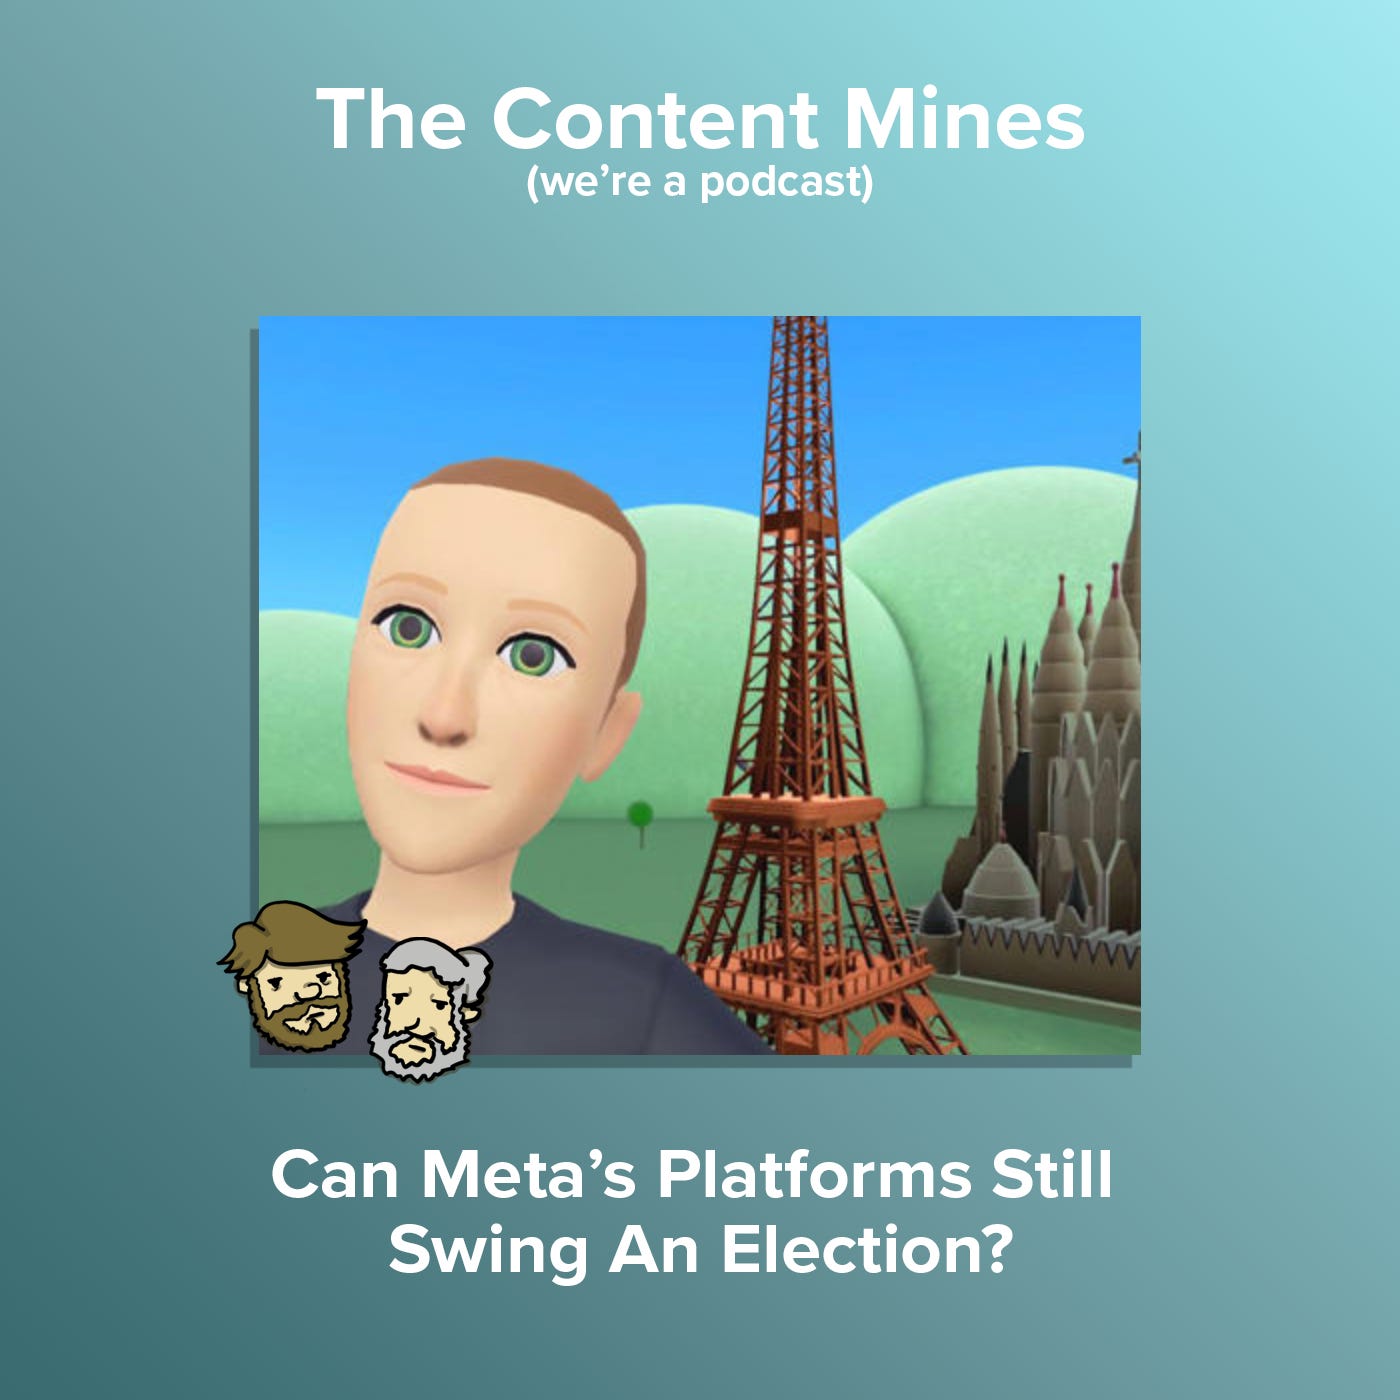 Can Meta's Platforms Still Swing An Election?